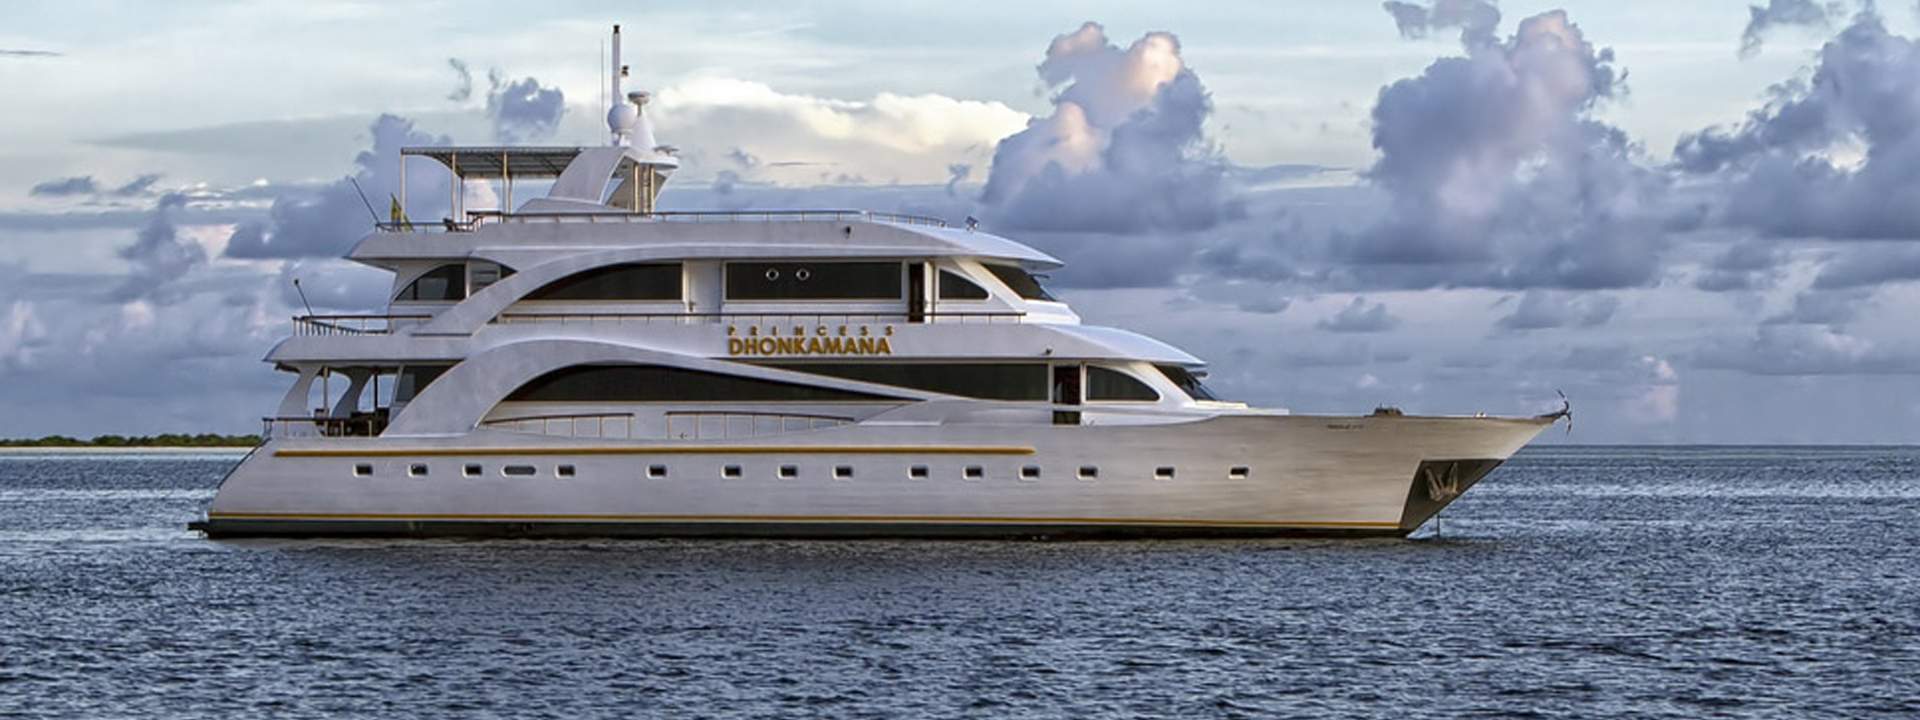 Luxury Yacht Princess Dhonkamana